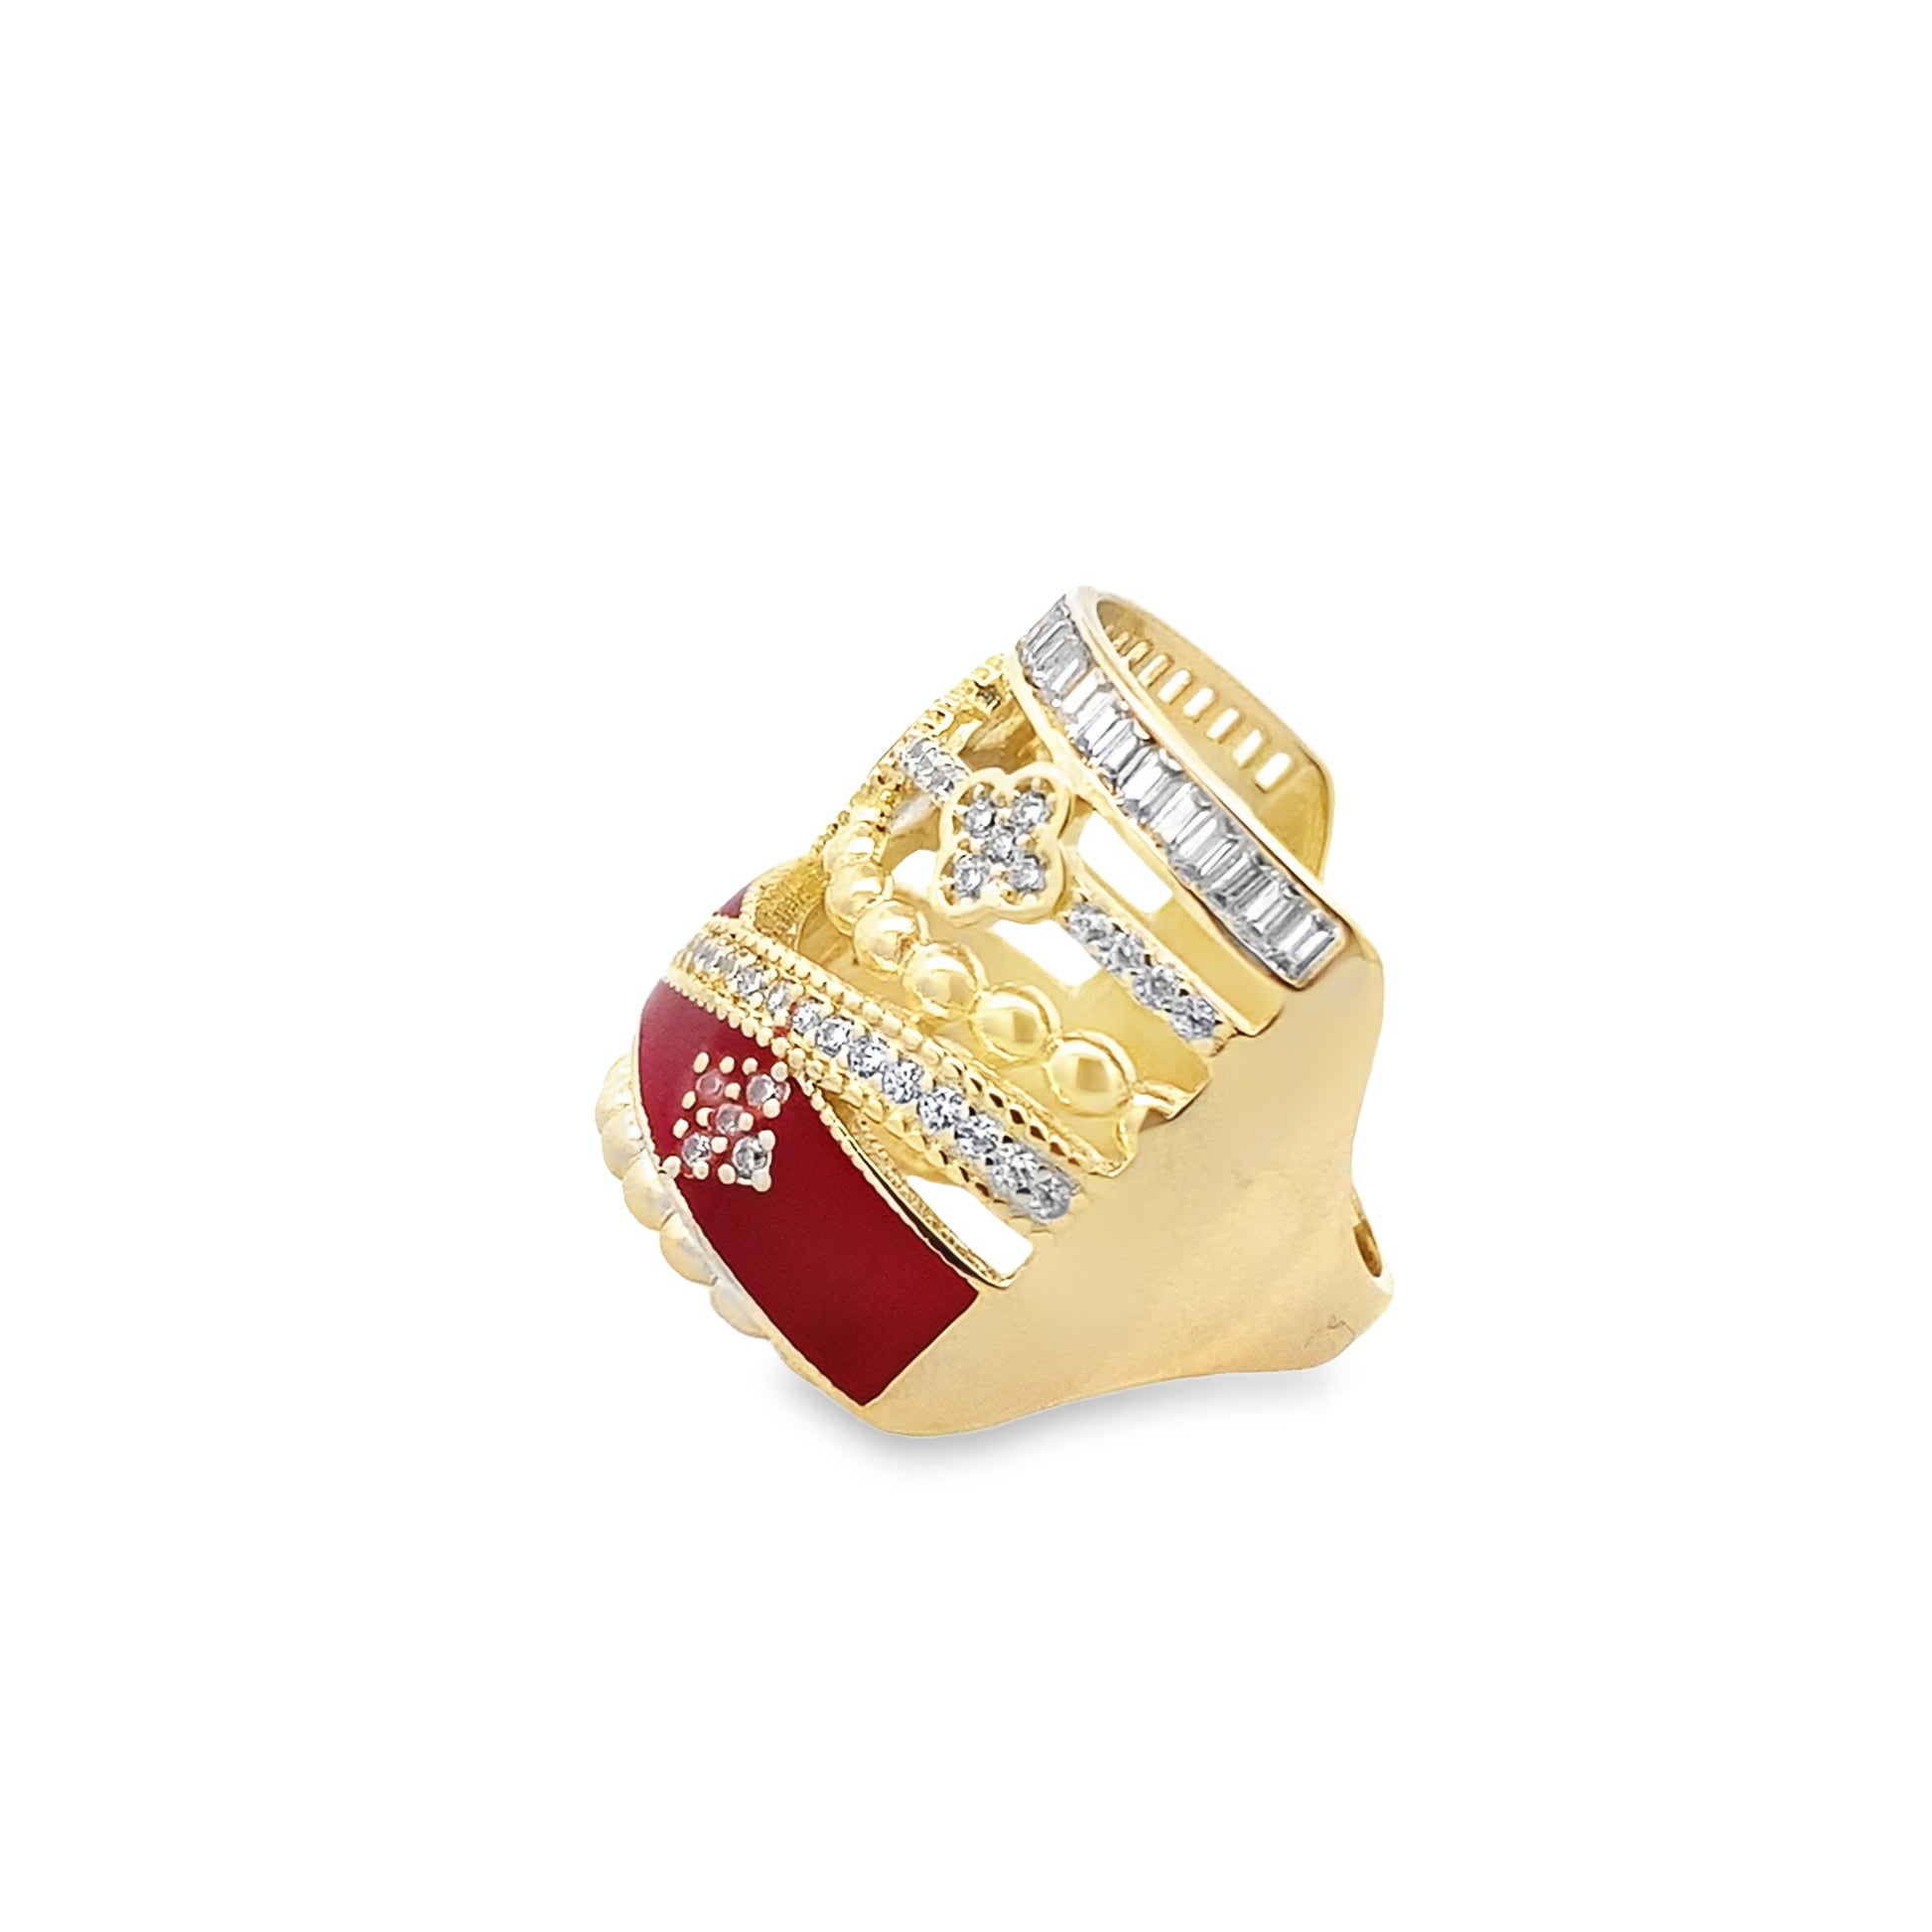 14K Yellow Gold Cz & Red Enamel Flower Fashion Ring Size 7.5 4.1Dwt